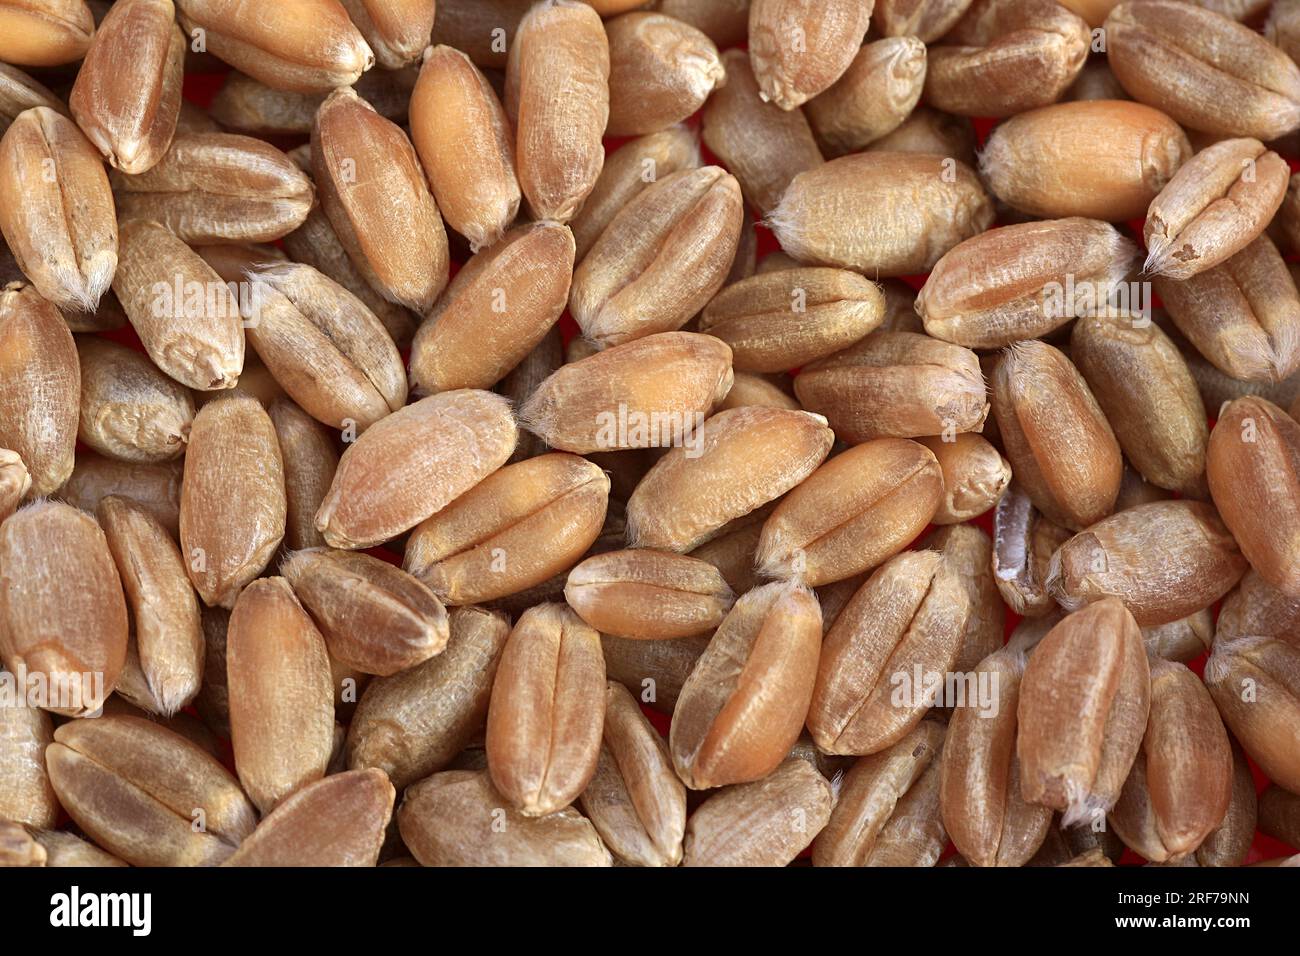 Saat-Weizen, Weich-Weizen, Weizen (Triticum aestivum), Koerner | bread wheat, cultivated wheat (Triticum aestivum), grains, Stock Photo